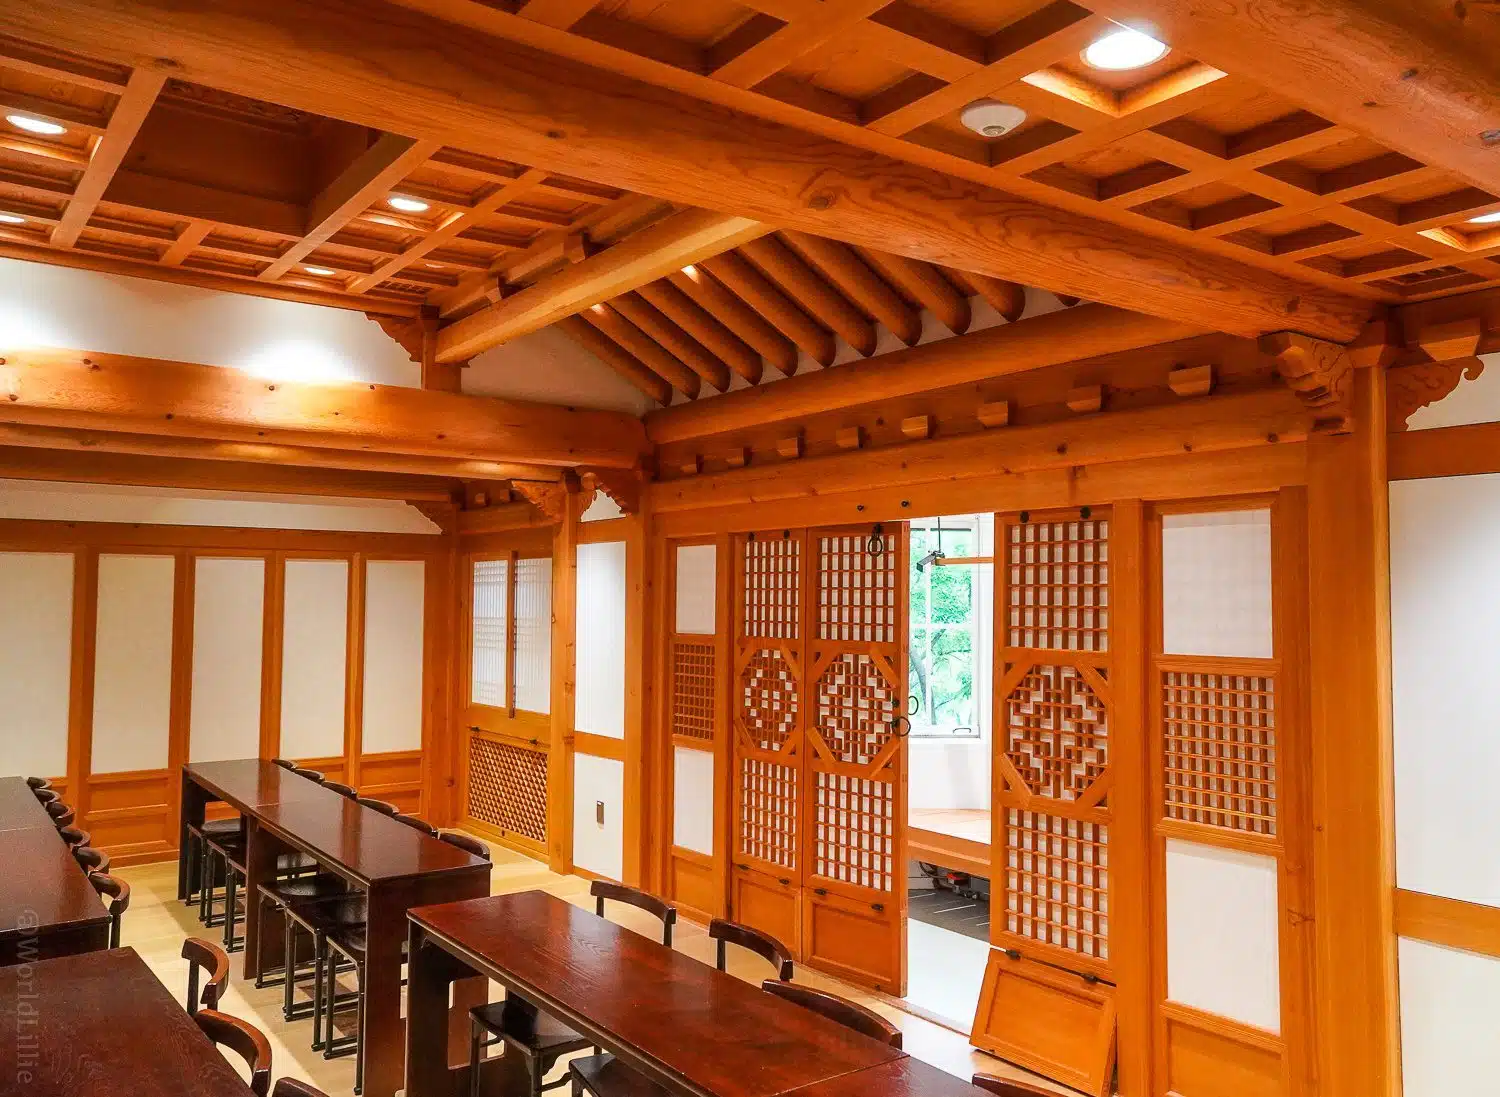 The Korean Heritage Room.